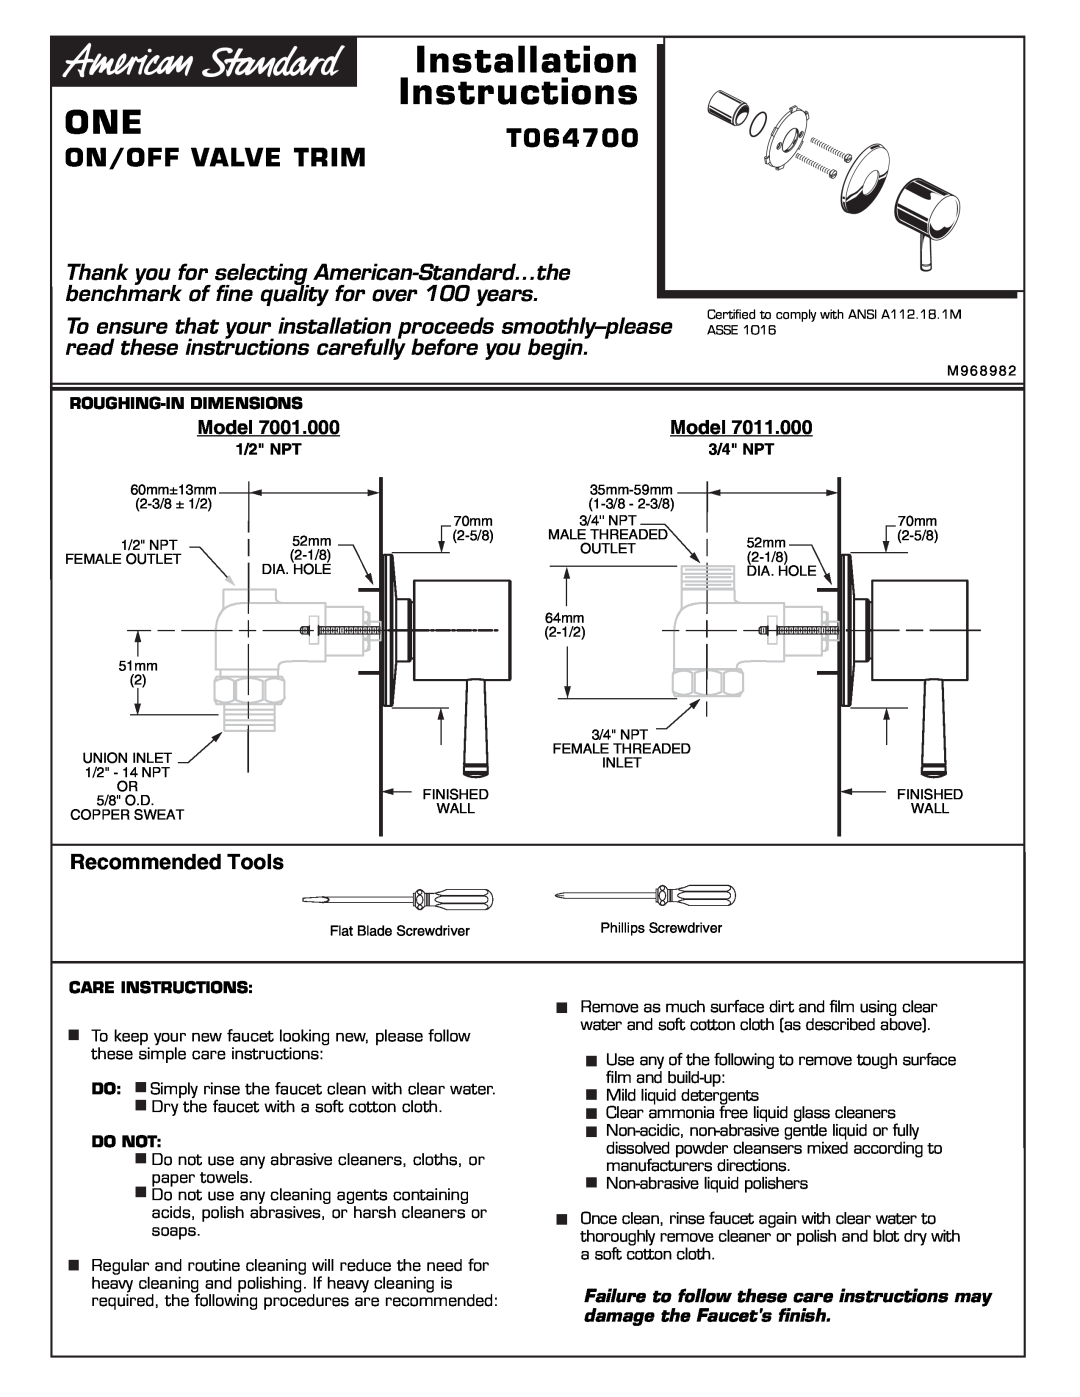 American Standard T064700 installation instructions On/Off Valve Trim, Installation, Instructions, Recommended Tools 